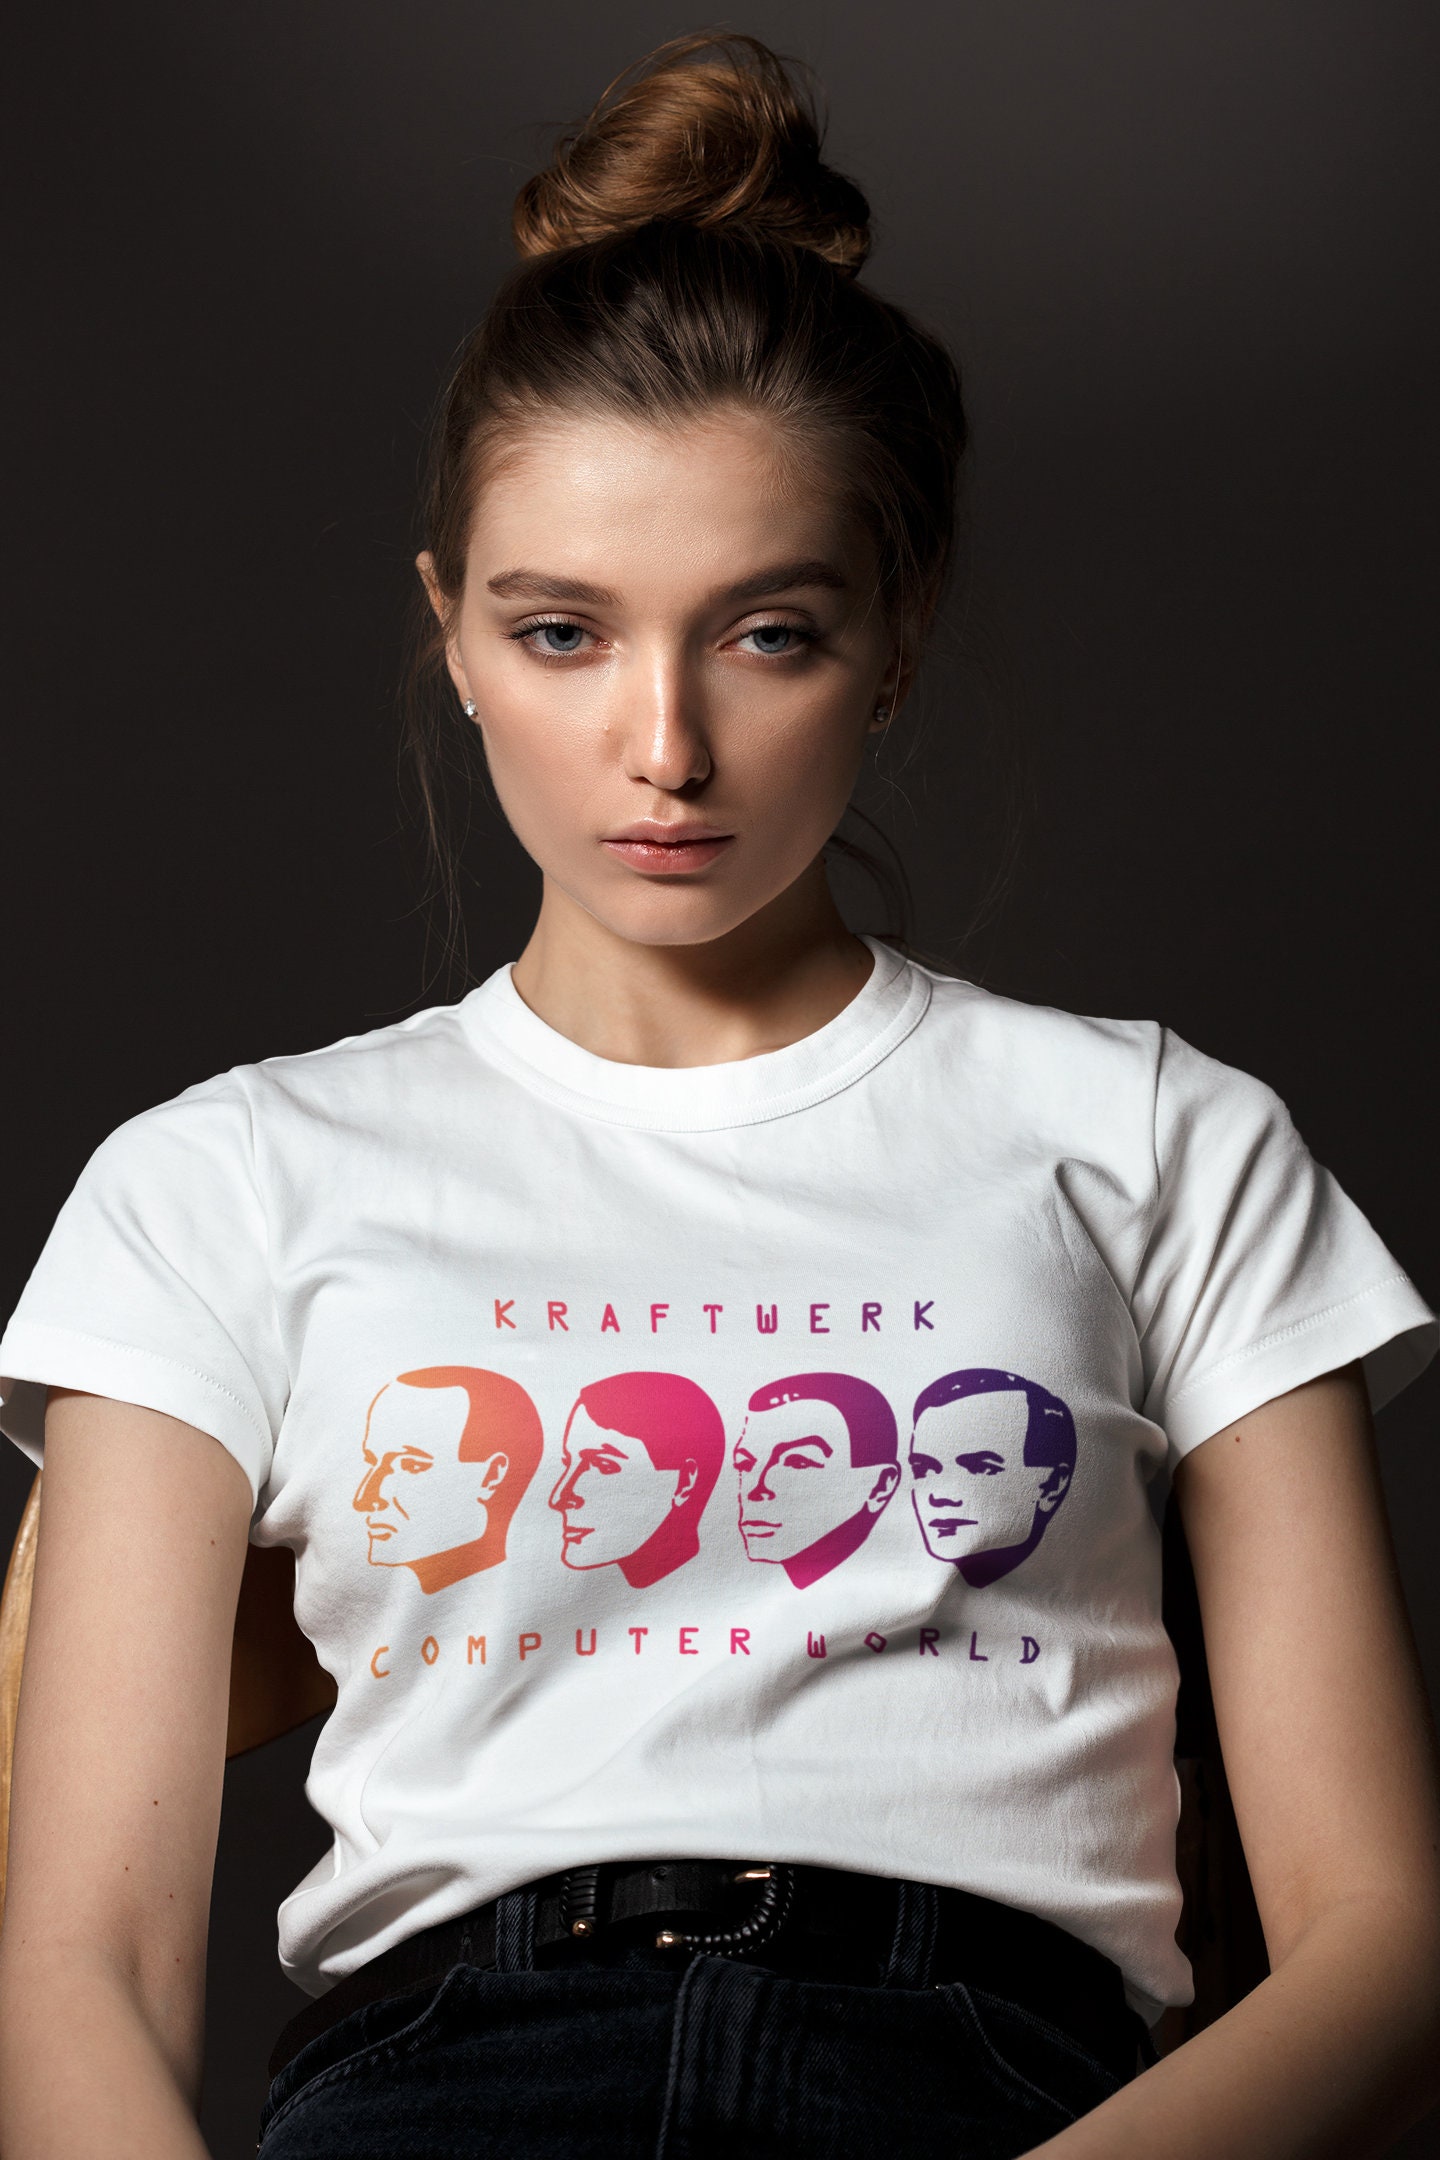 Computer World Retro Electronic Music Kraftwerk Unisex T-Shirt